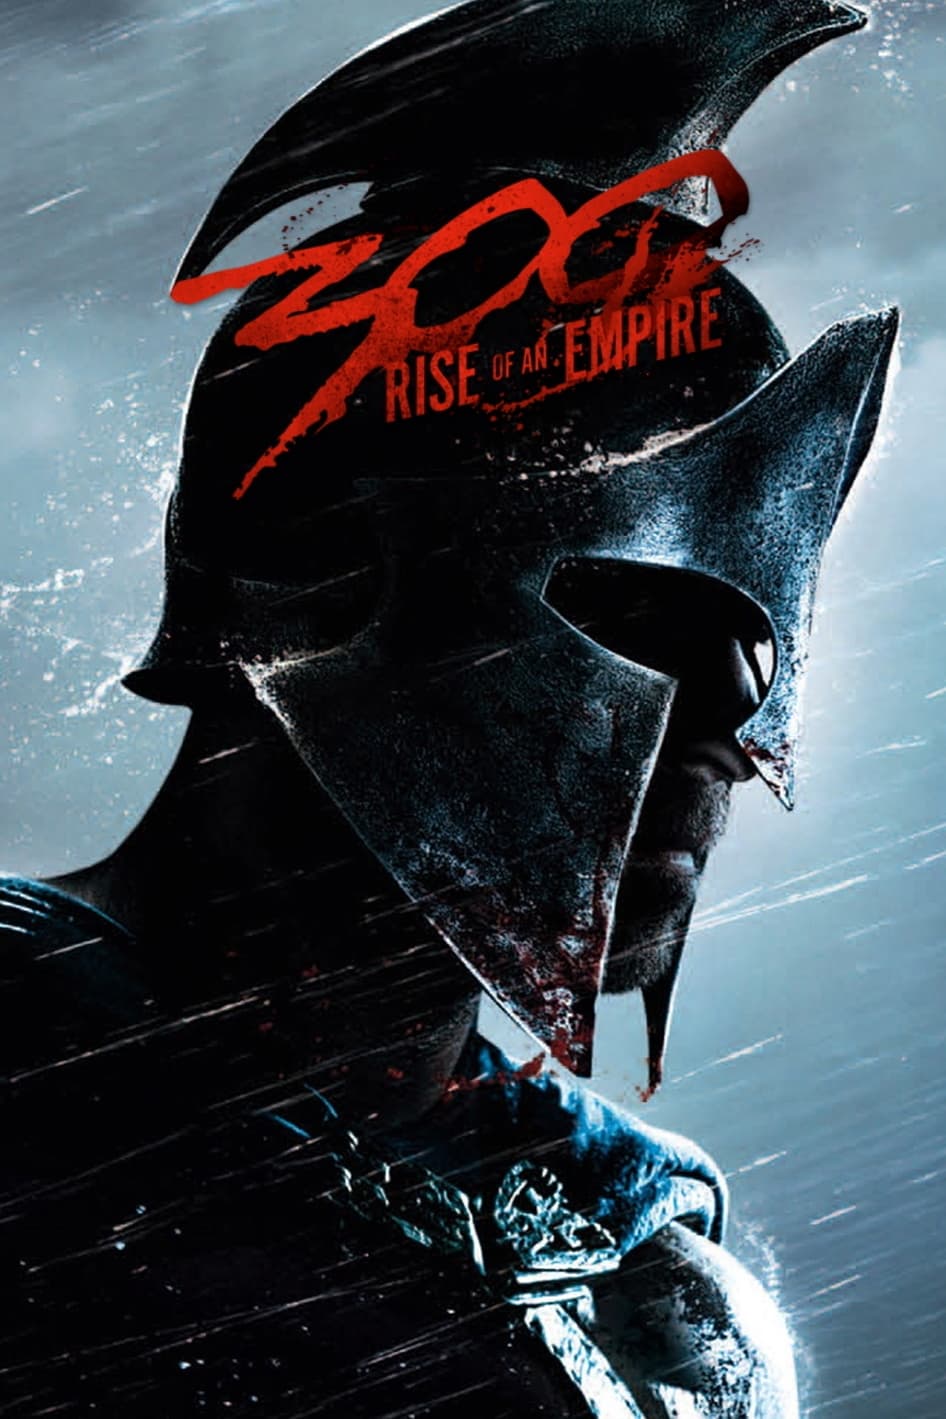 Stiahni si Filmy CZ/SK dabing 300: Vzostup impéria / 300: Rise of an Empire (2014)[CZ/EN][W-dl][HEVC][720p] = CSFD 63%